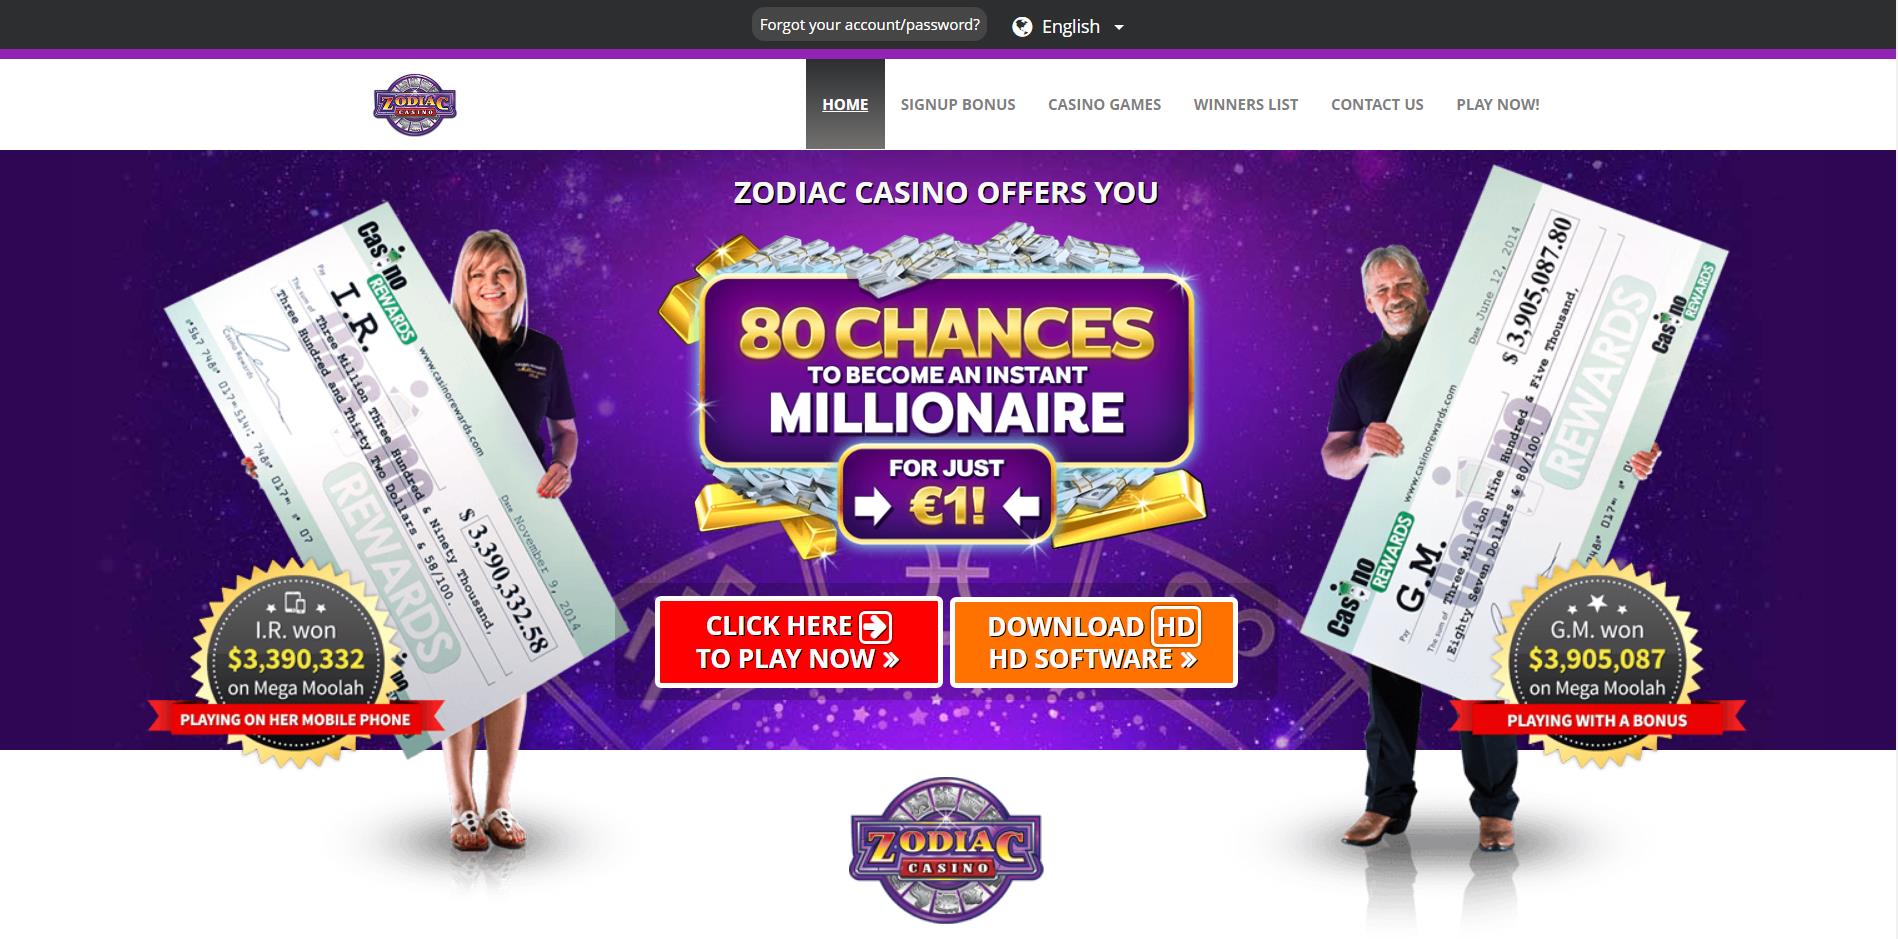 Zodiac Gambling enterprise Remark, Special Extra Offer